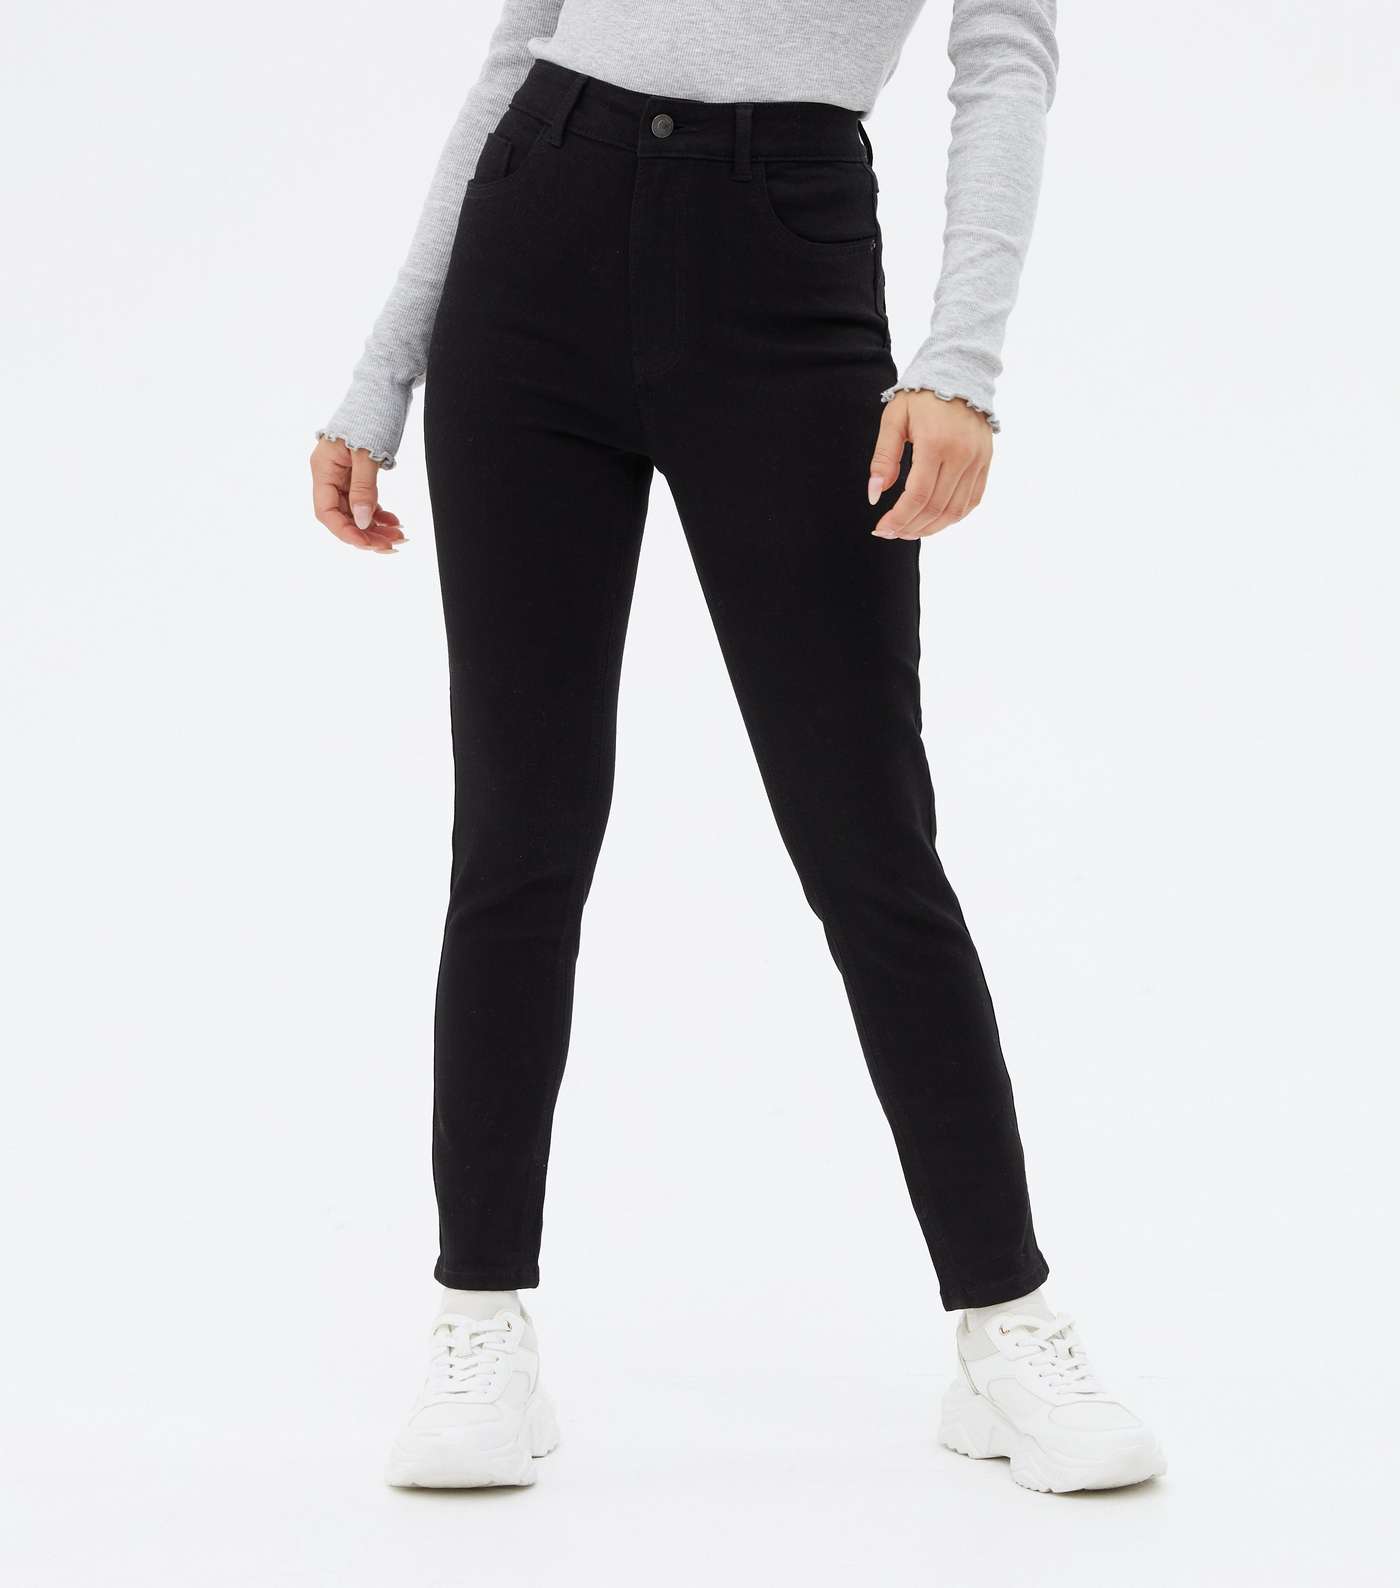 Petite Black Dark Wash Lift & Shape Jenna Skinny Jeans Image 2